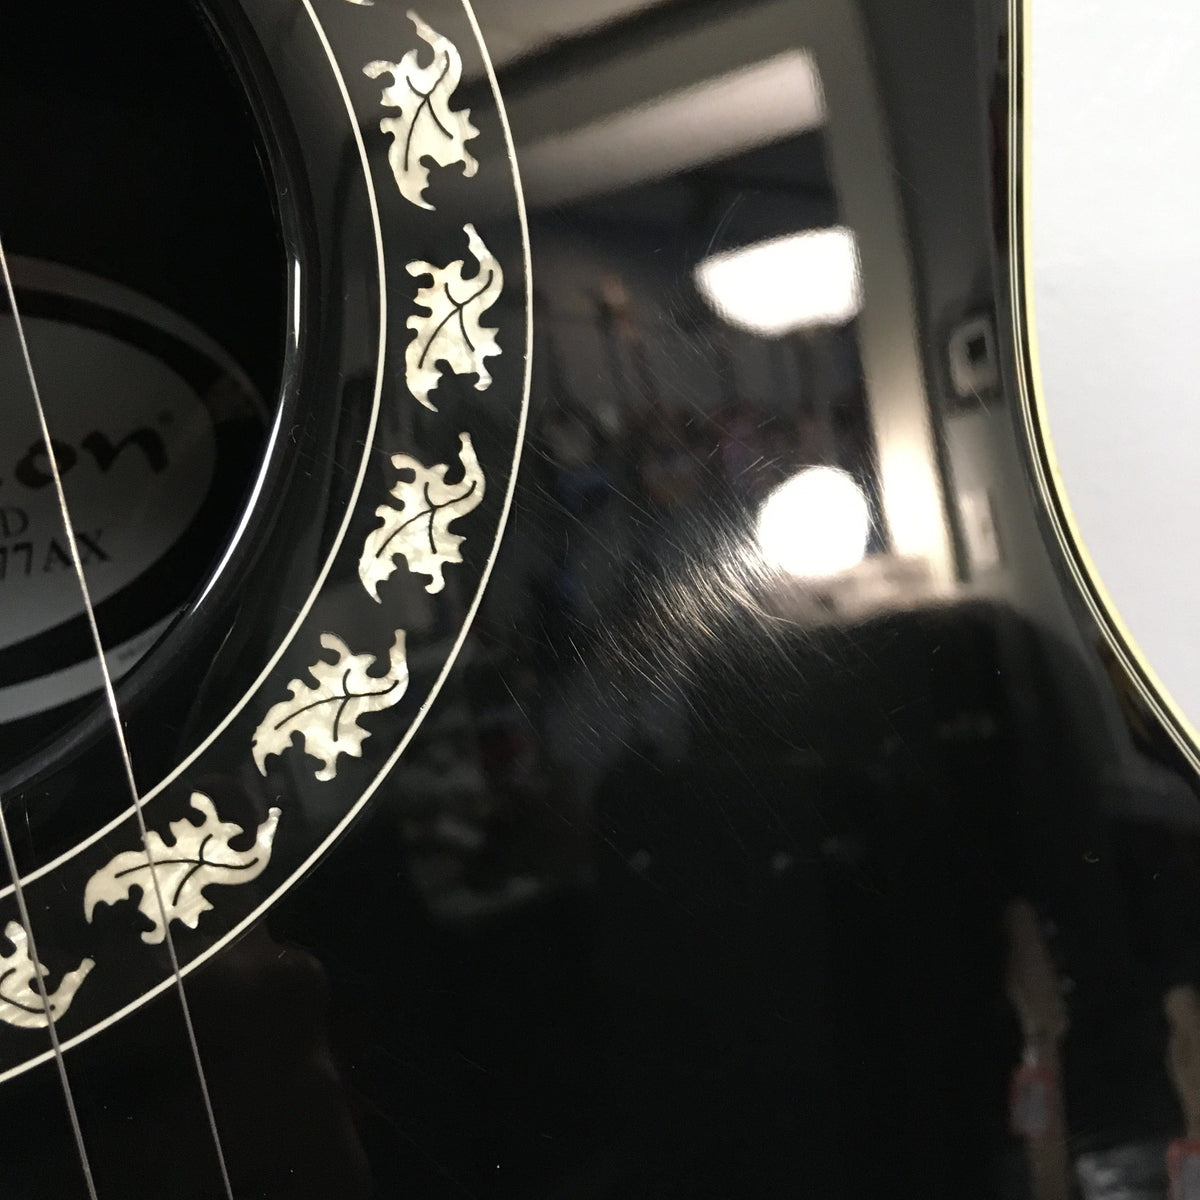 Ovation Legend 2077 AX Gloss Black Used Guitars on Main